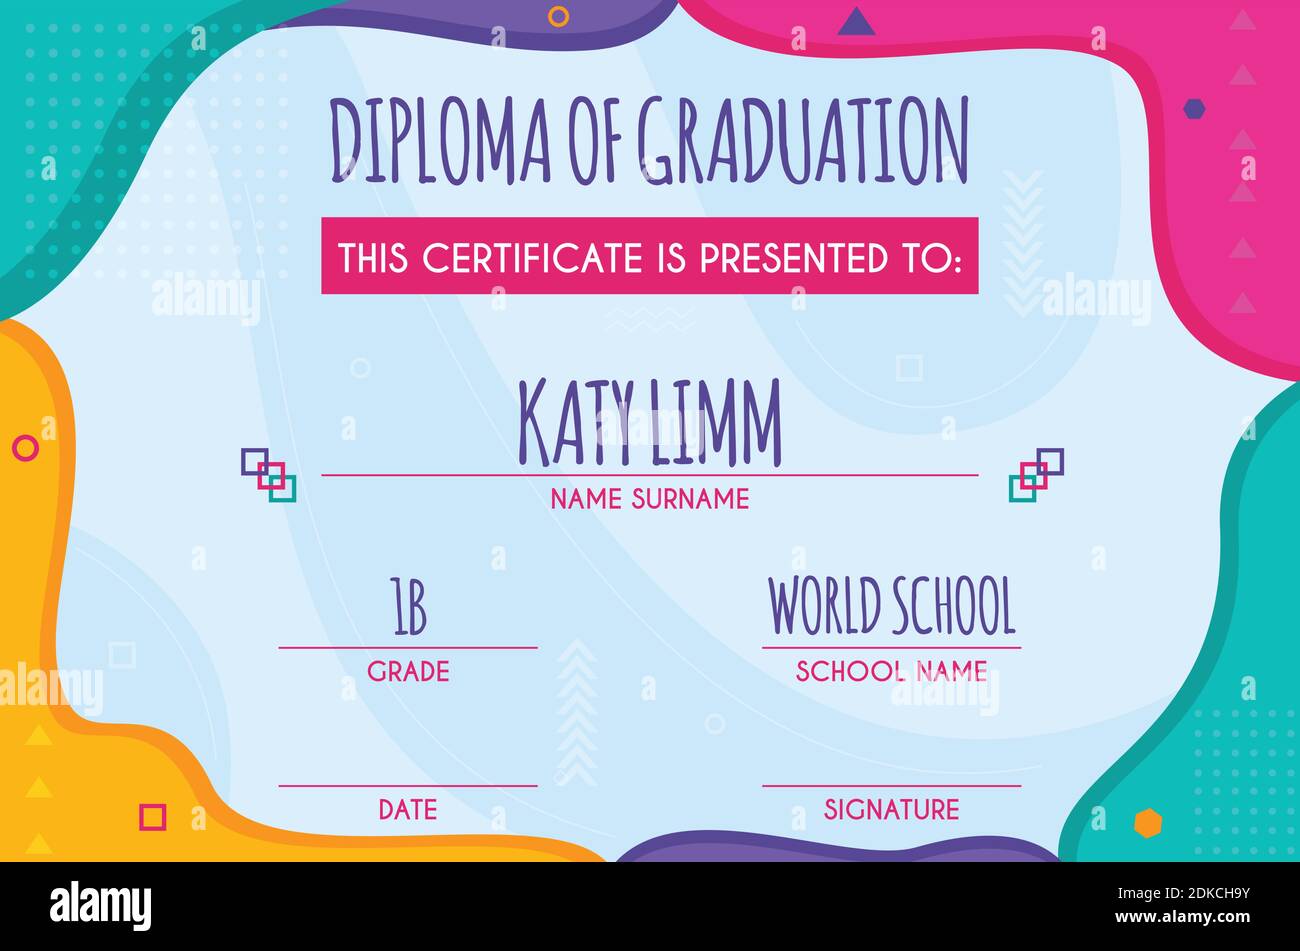 Diploma of graduation certificate template, vector illustration. Stock Vector